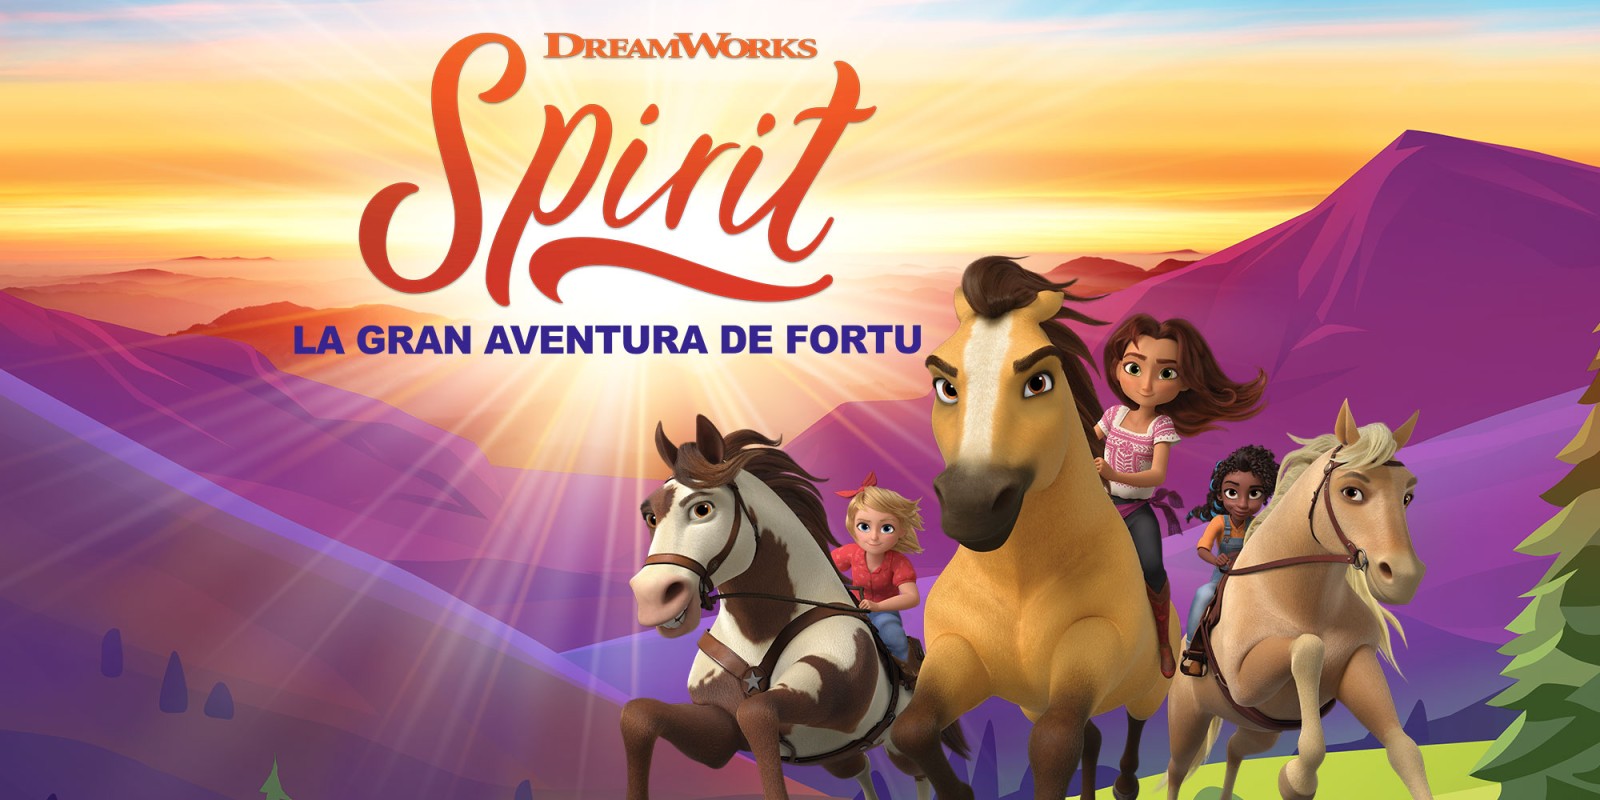 DreamWorks Spirit La gran aventura de Fortu